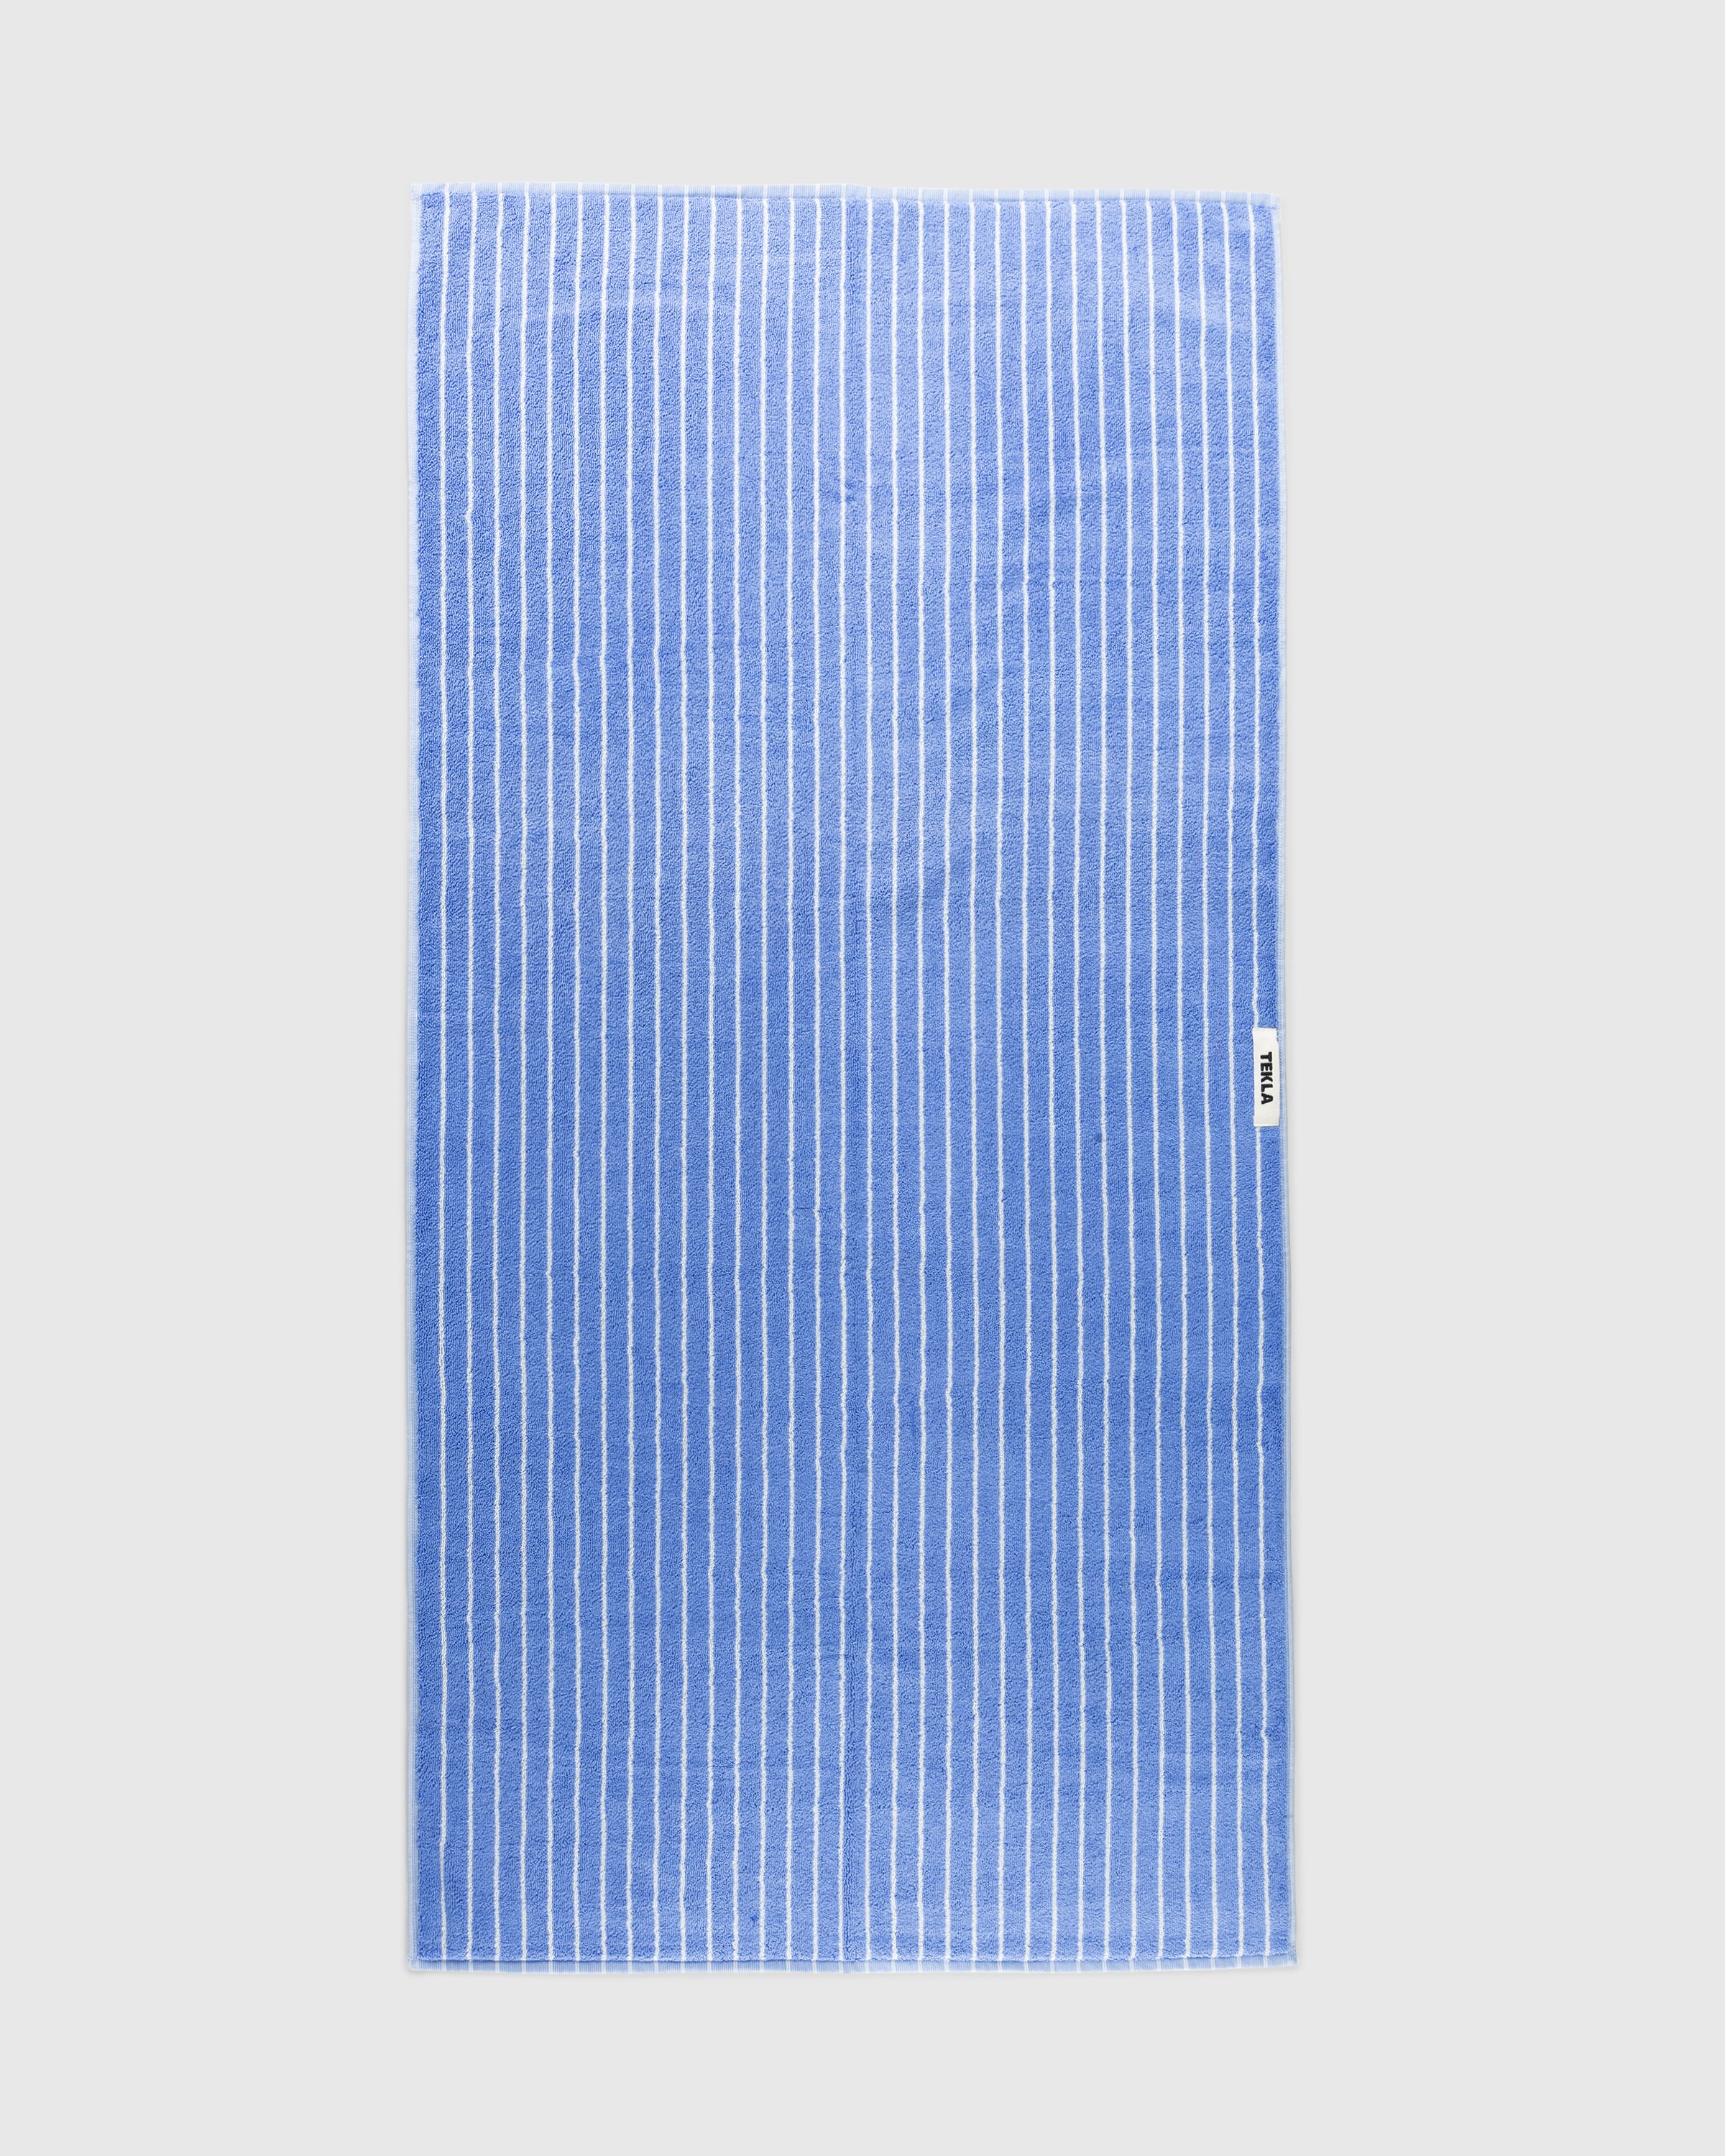 Tekla - Bath Towel 70x140 Clear Blue Stripes - Lifestyle - Blue - Image 2